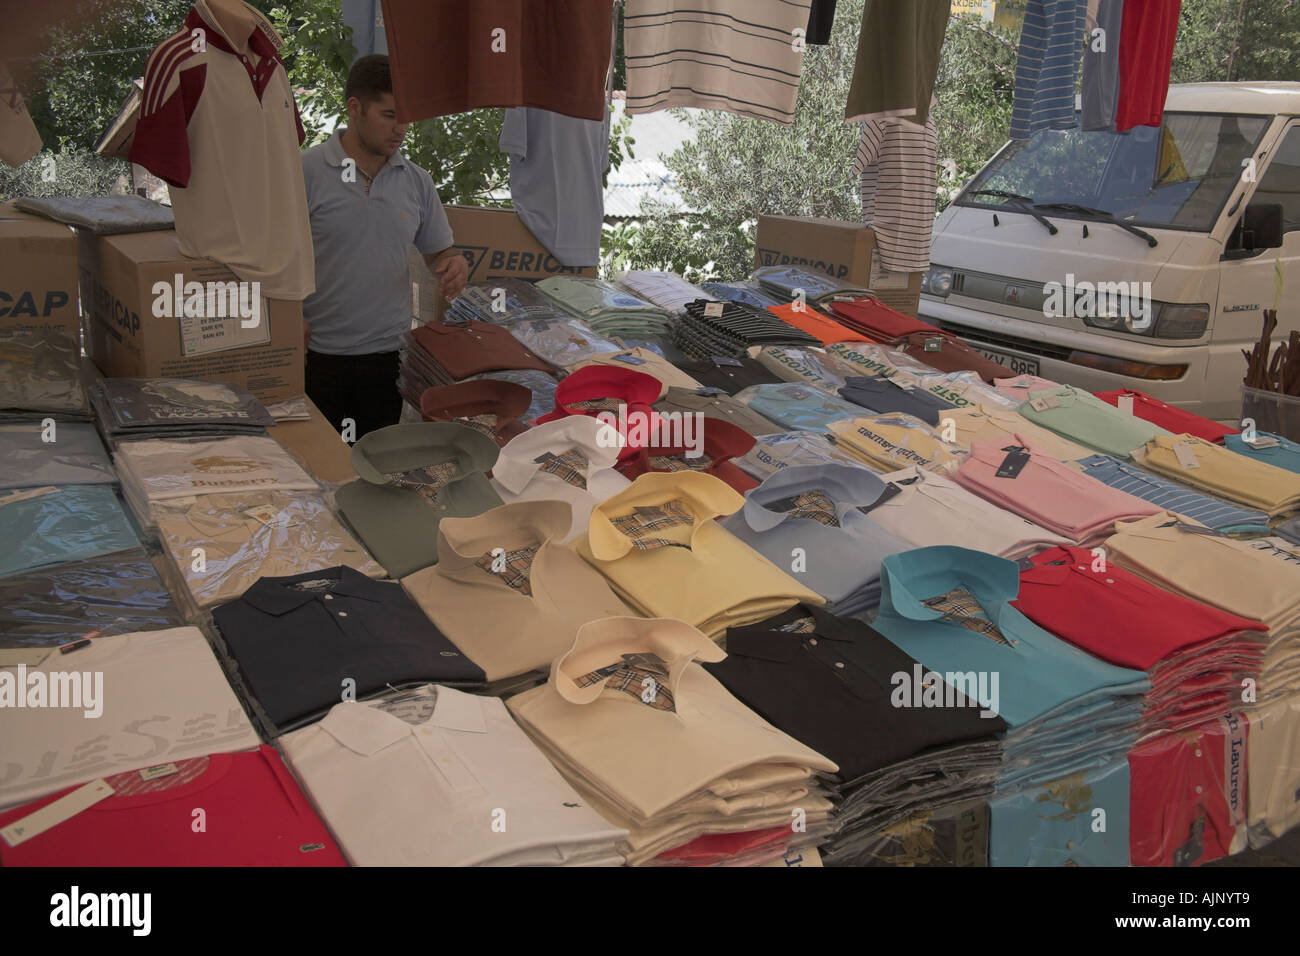 Stock photograph of clothing stall in market Kalkan Turkey selling fake designer label clothing Stock Photo